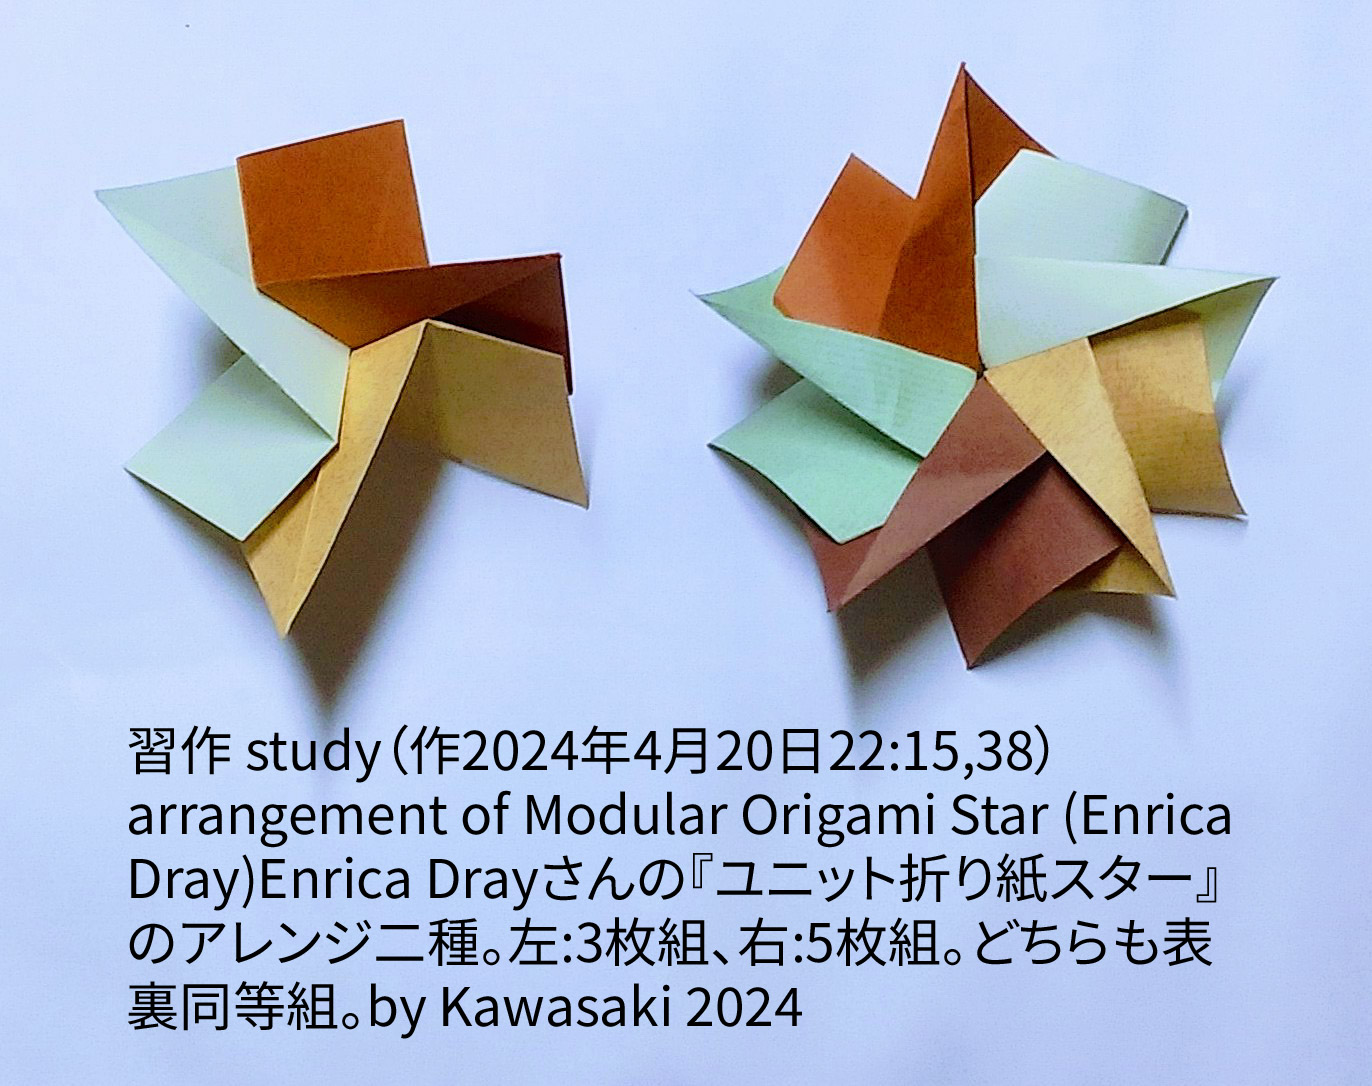 2024/04/20(Sat) 22:59「習作 study（作2024年4月20日22:15,22:38）arrangement of Modular Origami Star (Enrica Dray)Enrica Drayさんの『ユニット折り紙スター』のアレンジ二種。」川崎敏和 T.Kawasaki
（創作者 Author：川崎敏和 T.Kawasaki,　製作者 Folder：川崎敏和 T.Kawasaki ,　出典 Source：折り図無し no diagrm）
 Enrica Drayさんの『ユニット折り紙スター』のアレンジ二種。左:3枚組、右:5枚組。どちらも色画用紙で折ったパーツを表裏同等に組んだもの。by Kawasaki 2024